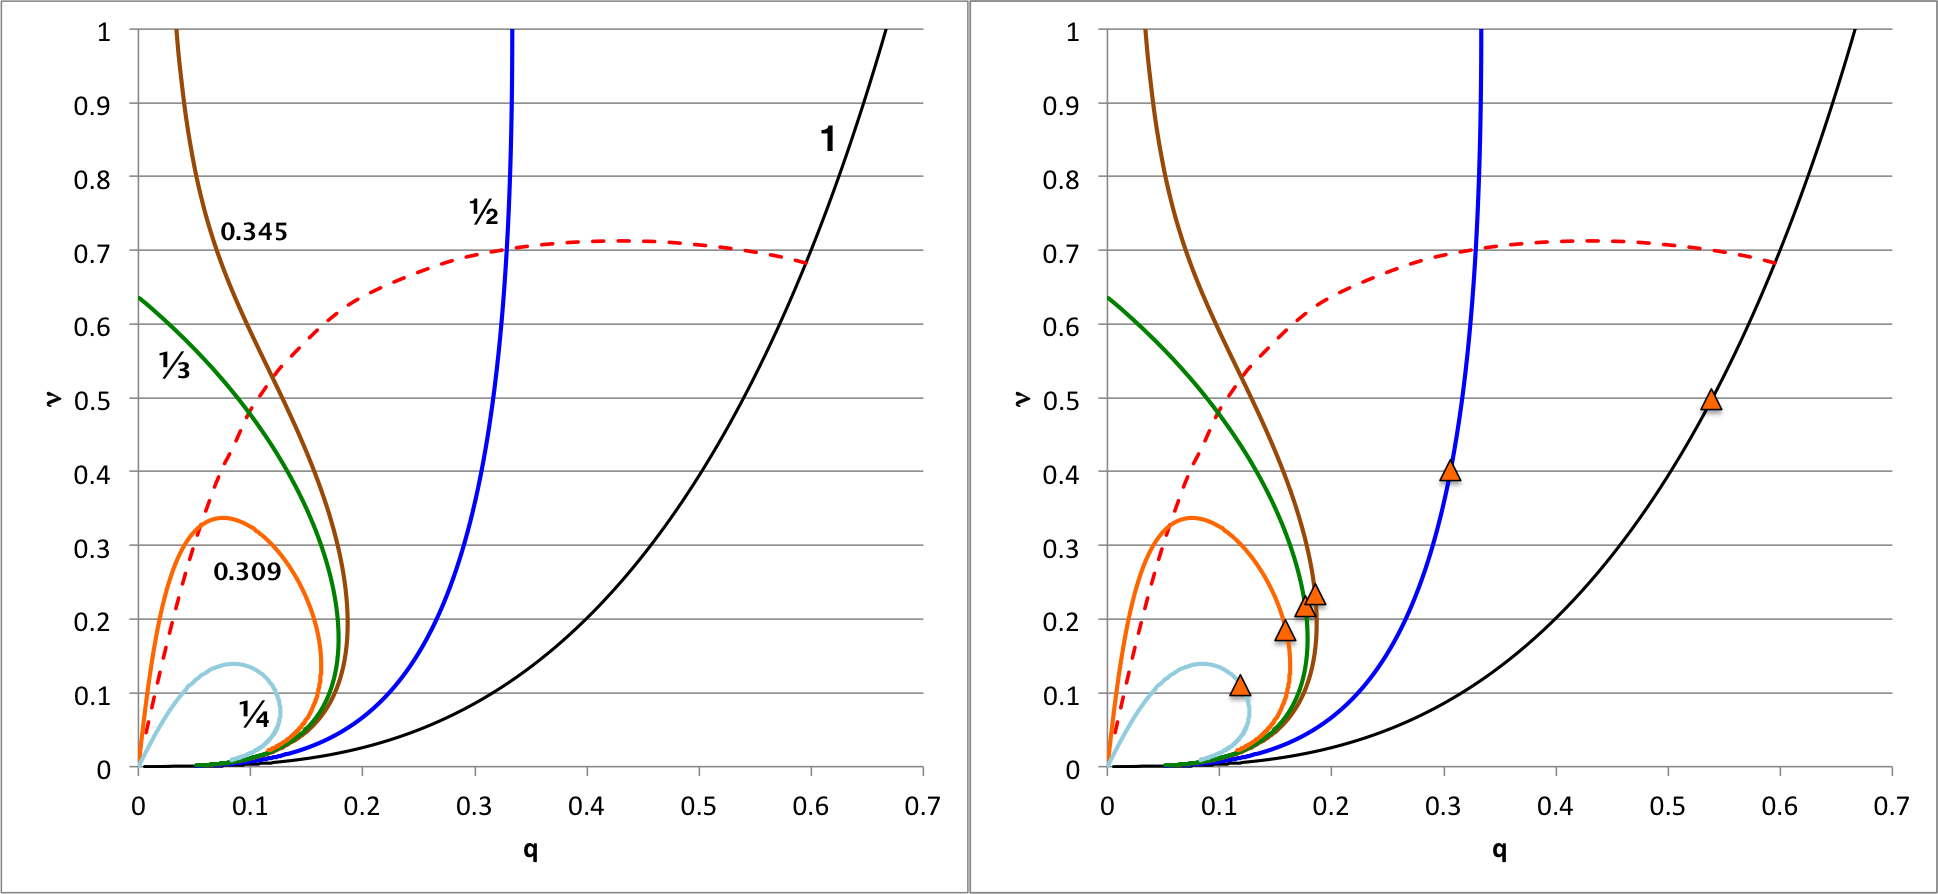 dynamical stability in qNu plane